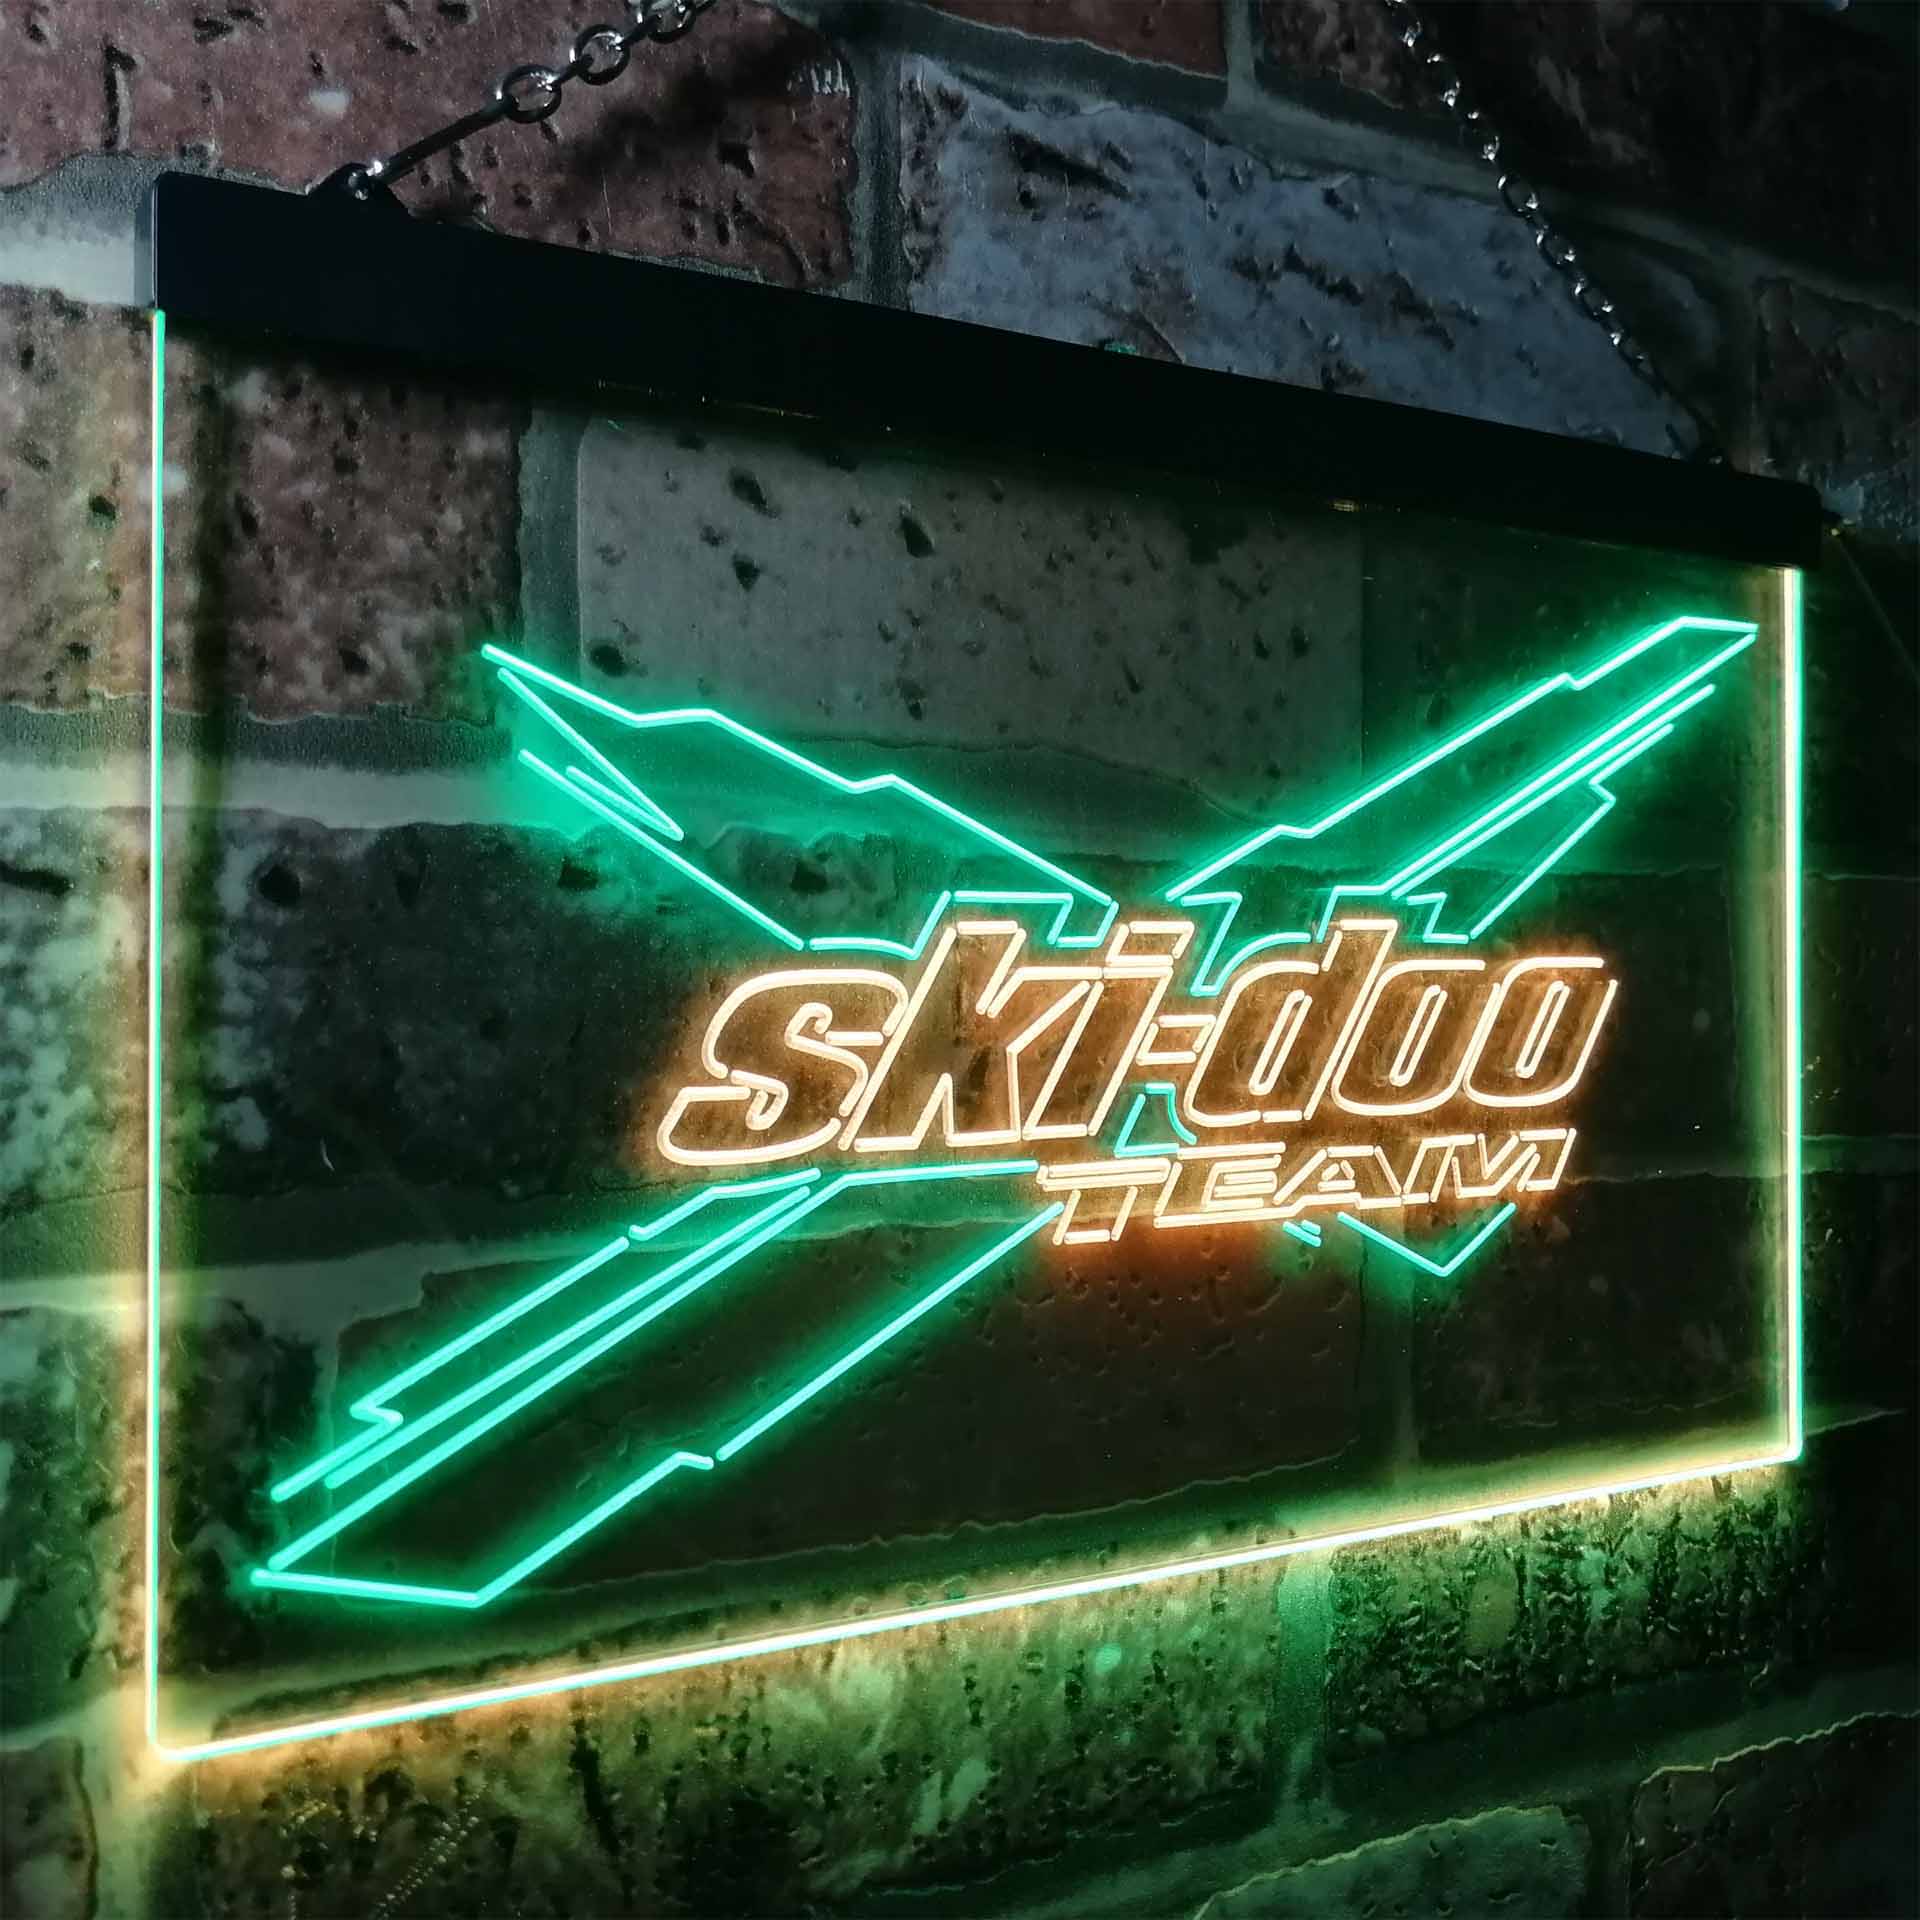 Ski-doo Neon LED Sign